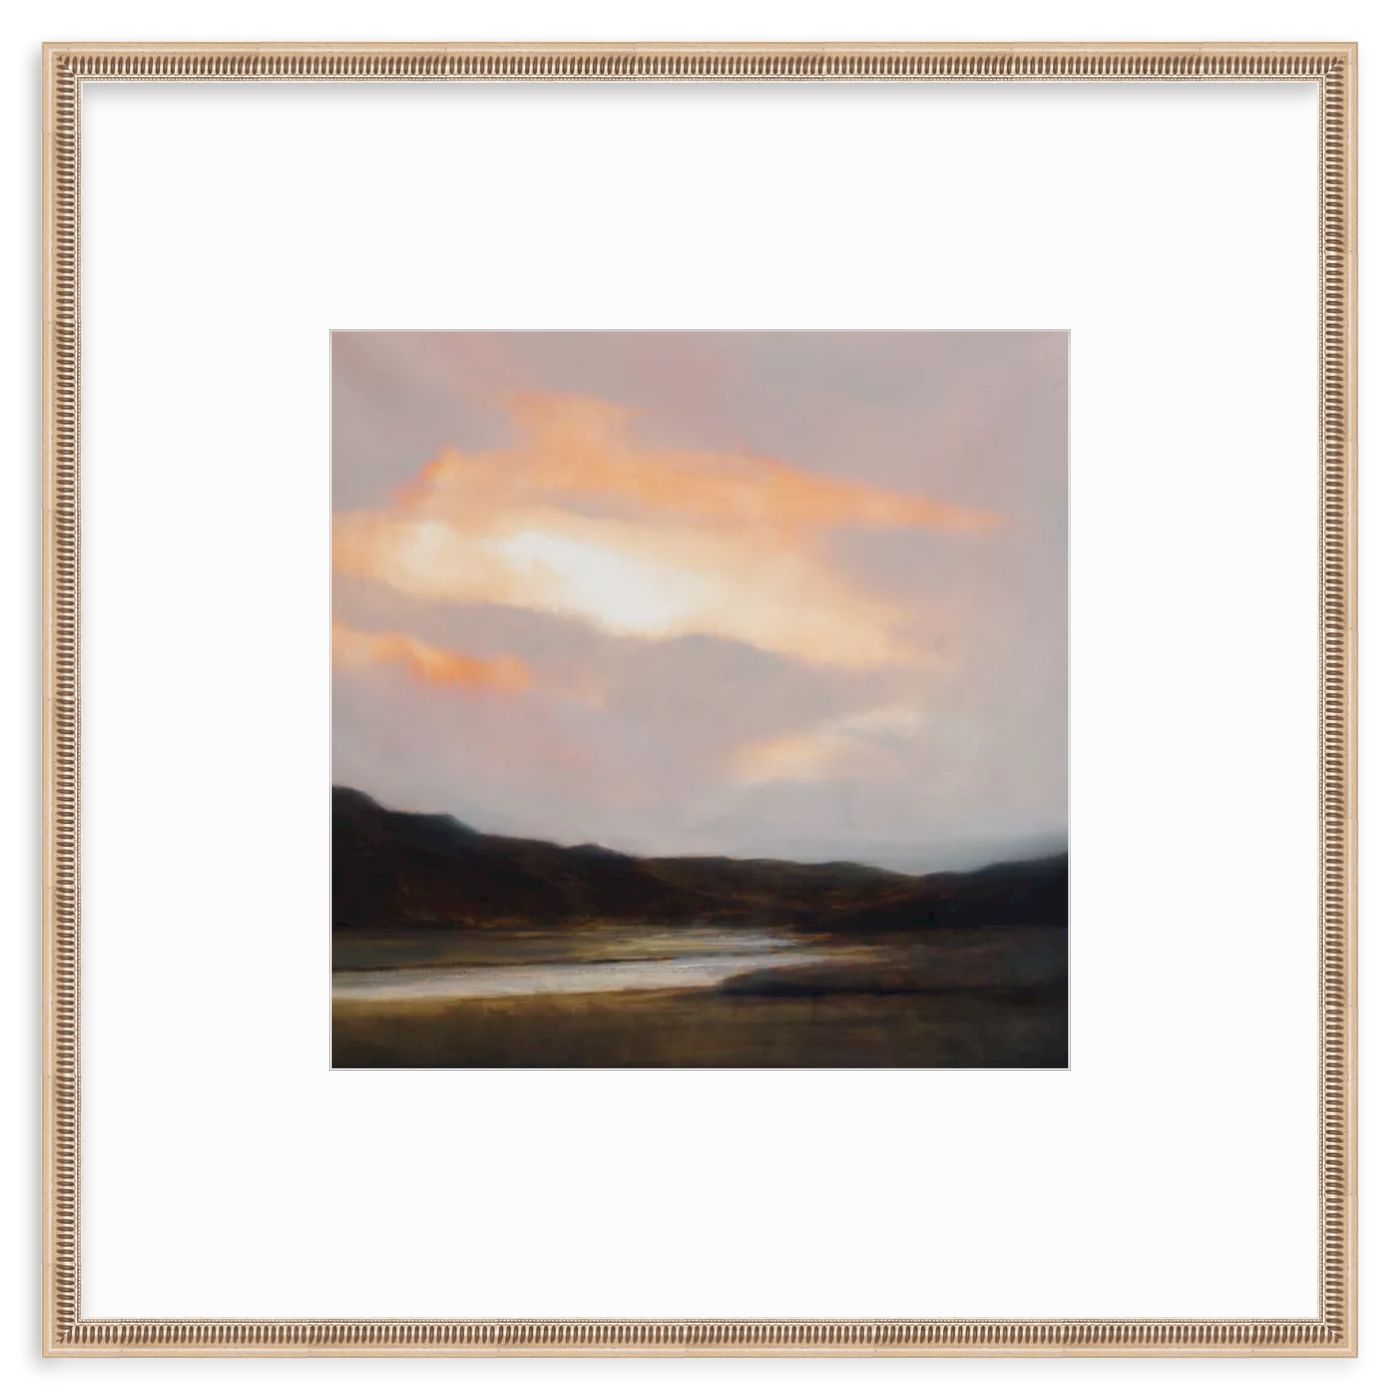 Glow on the Horizon, 31x31" framed print